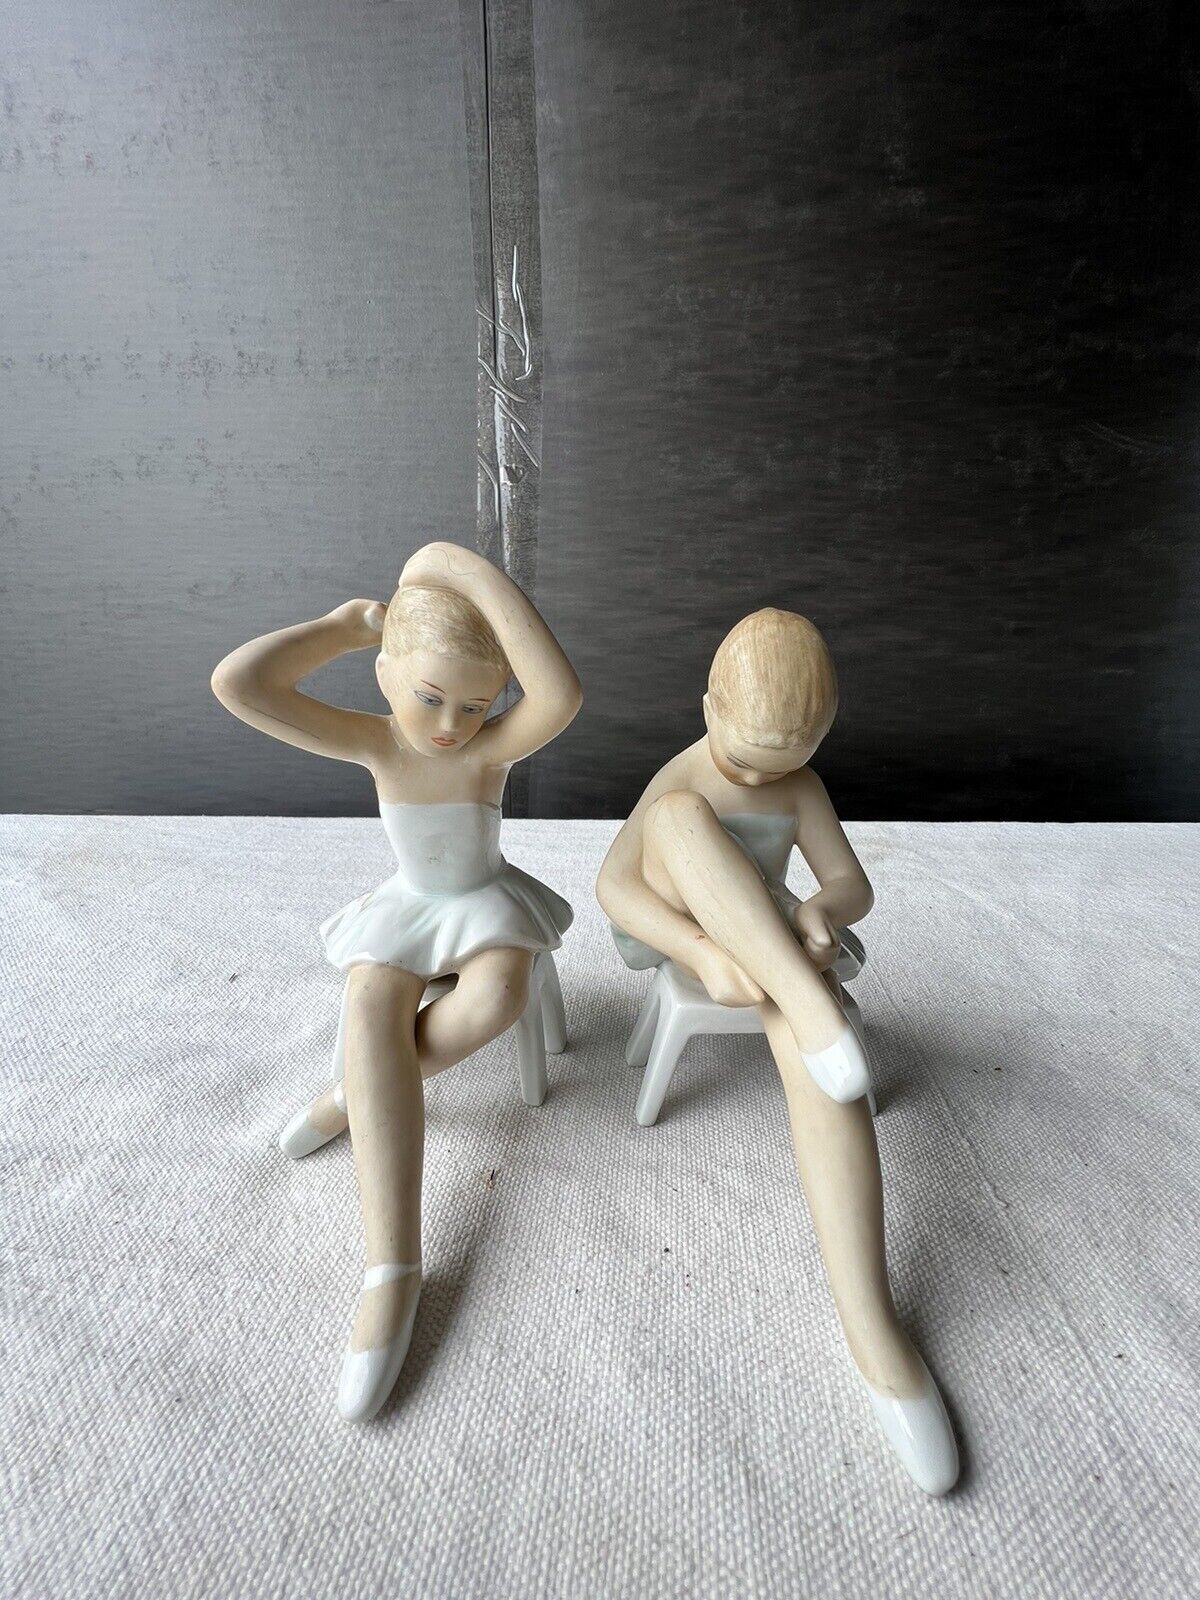 2 Vintage Wallendorf ballerina figurines, German porcelain, marked 1764.